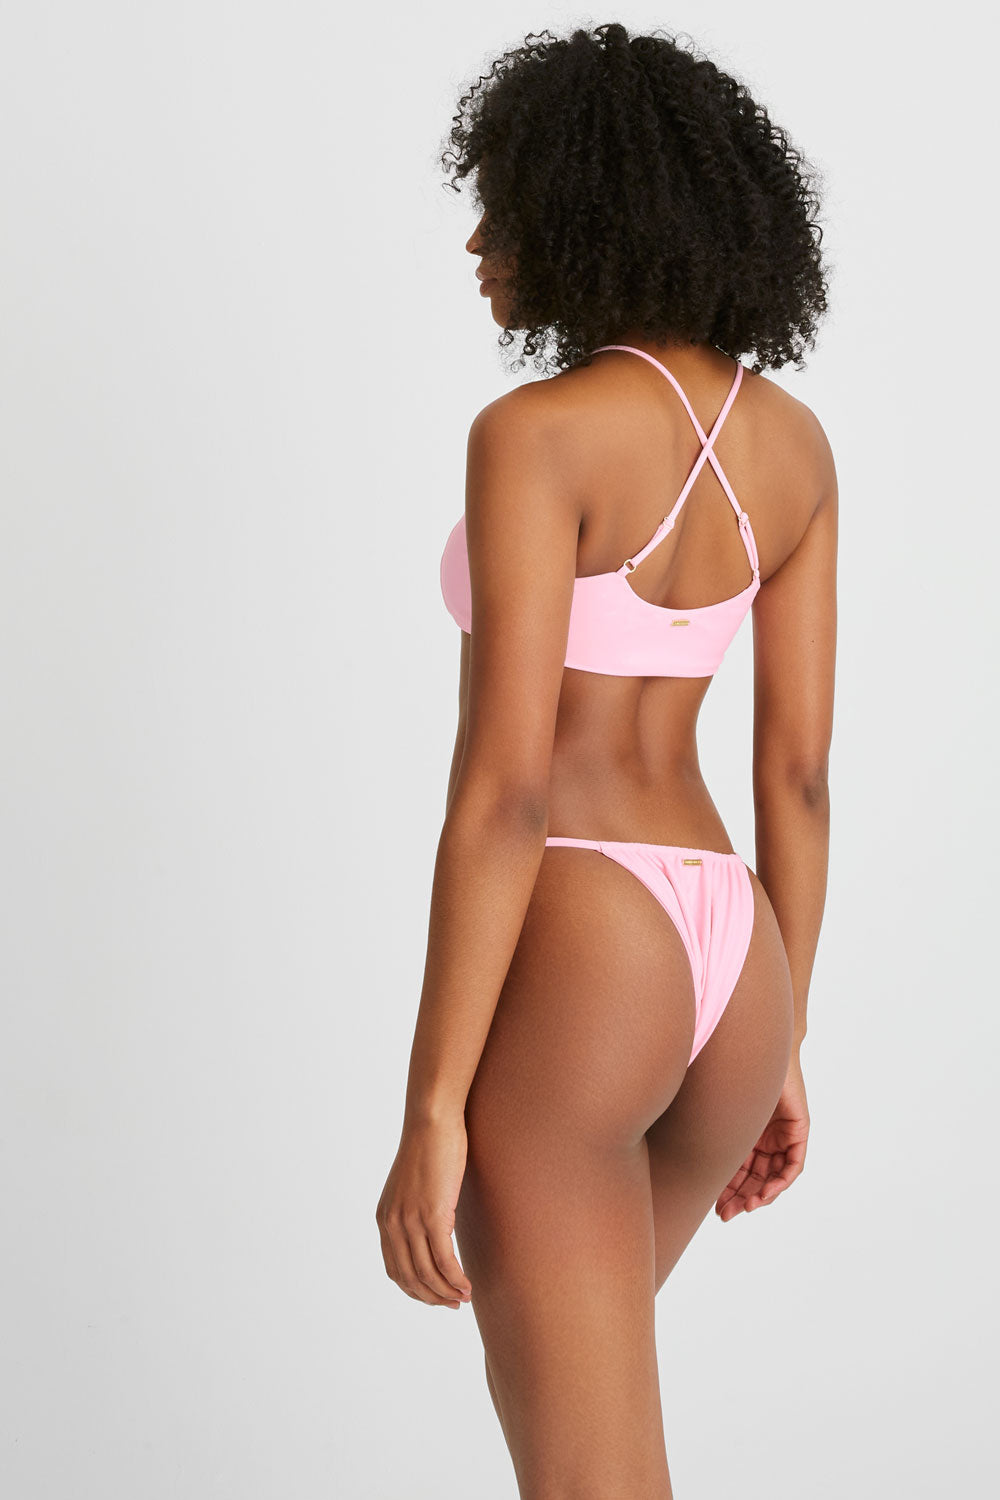 Model wears pink bikini with a cross over back